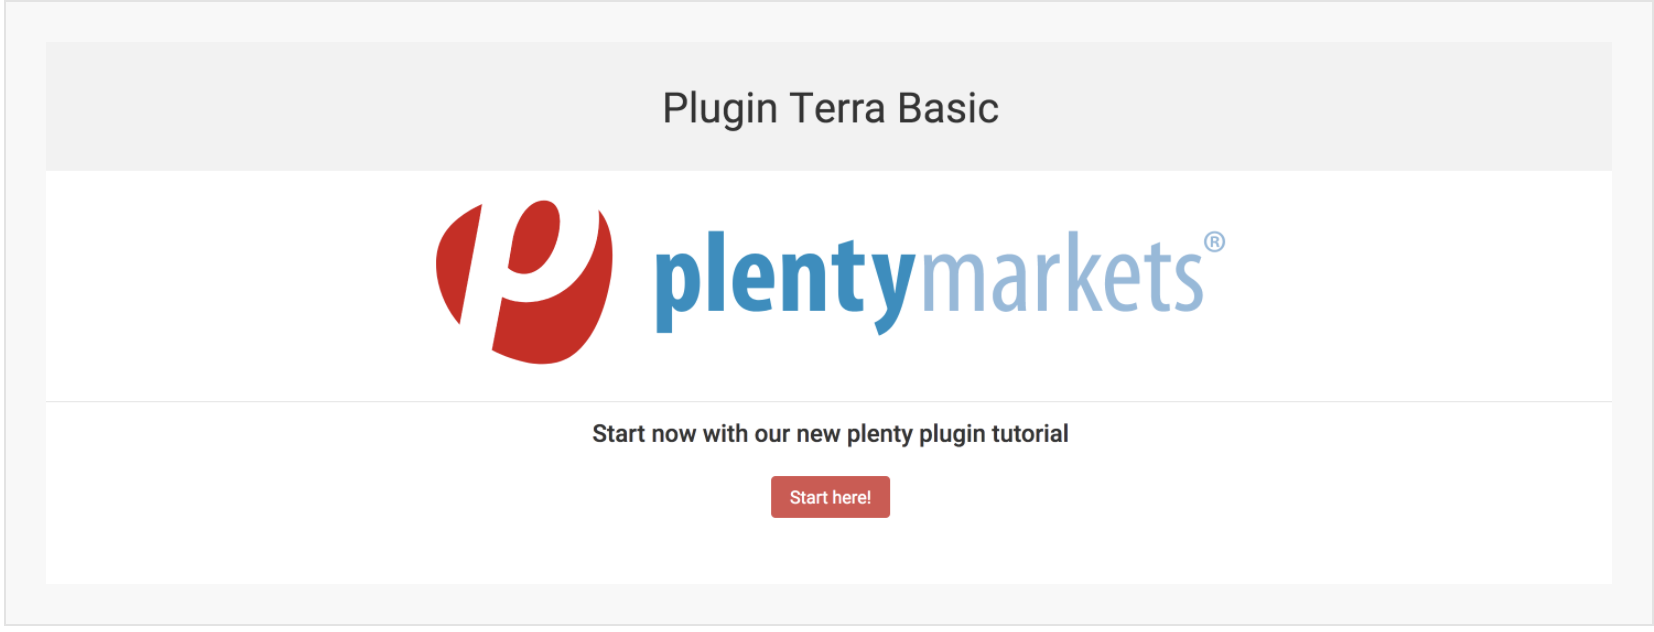 Plugin Terra-Basic overview